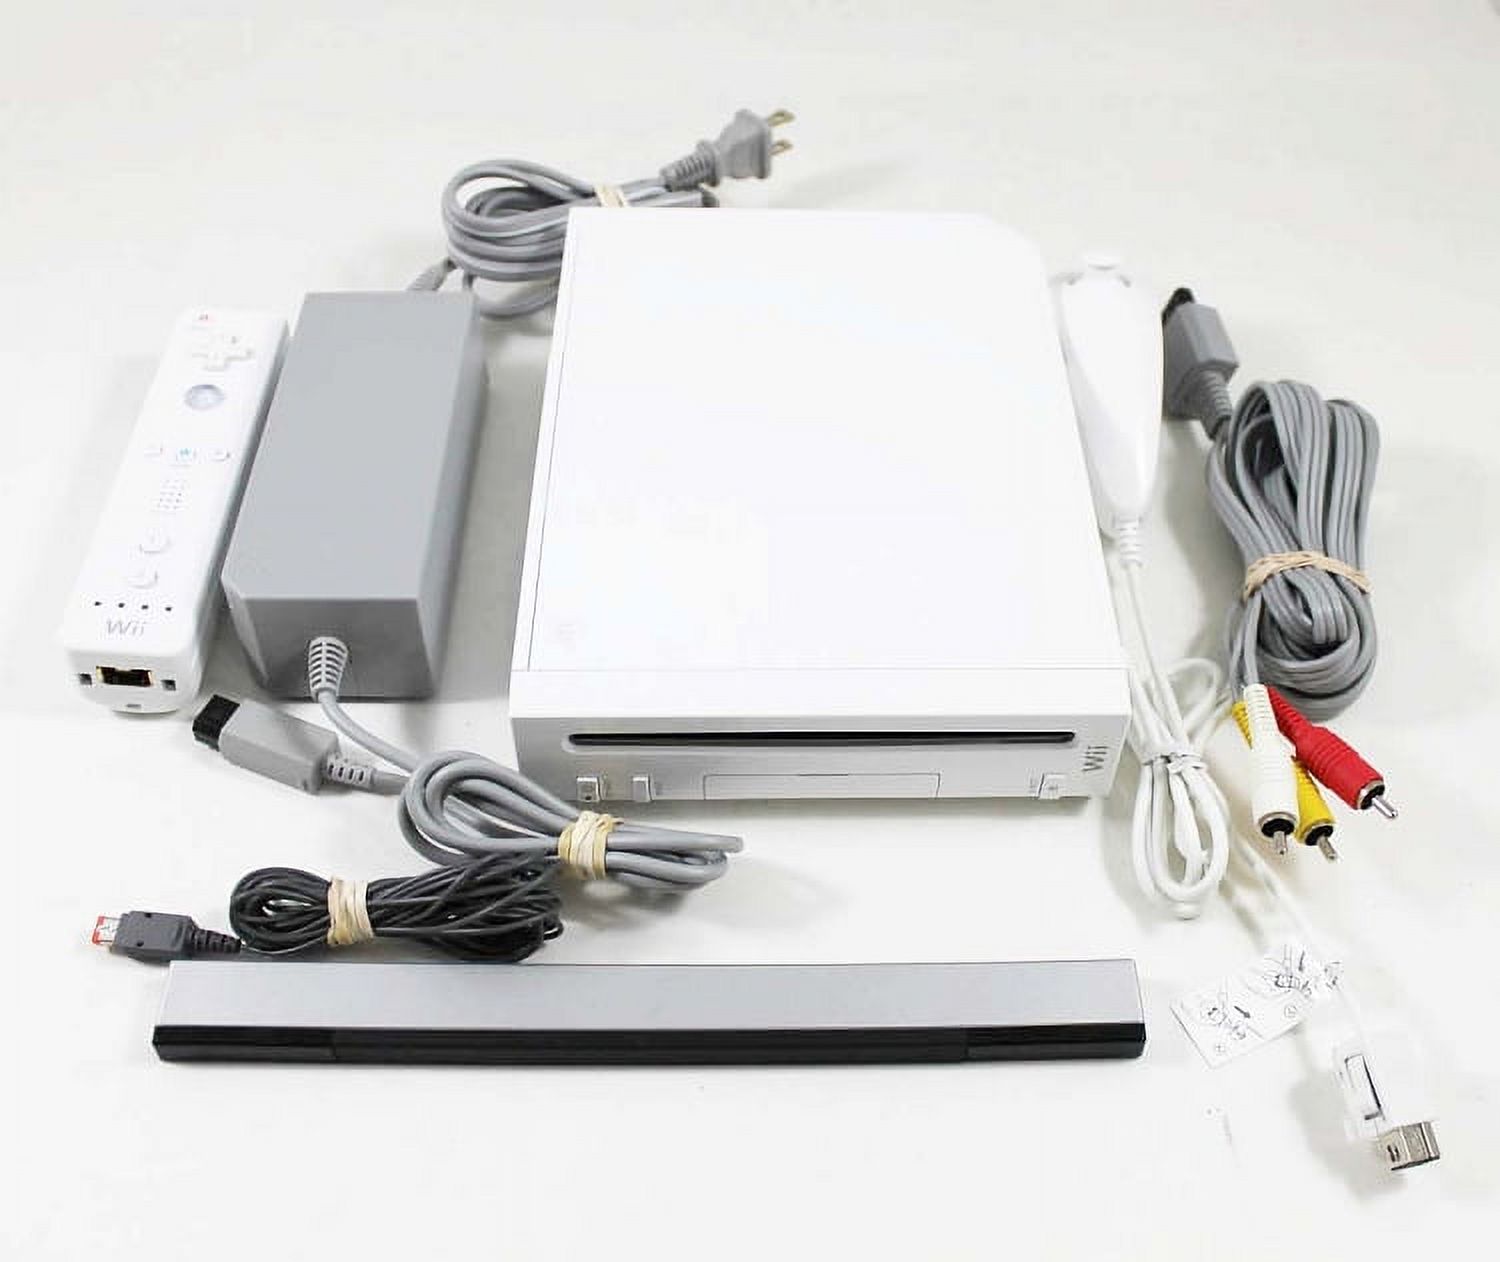 Restored Nintendo Wii Console, White (Refurbished) - image 1 of 3